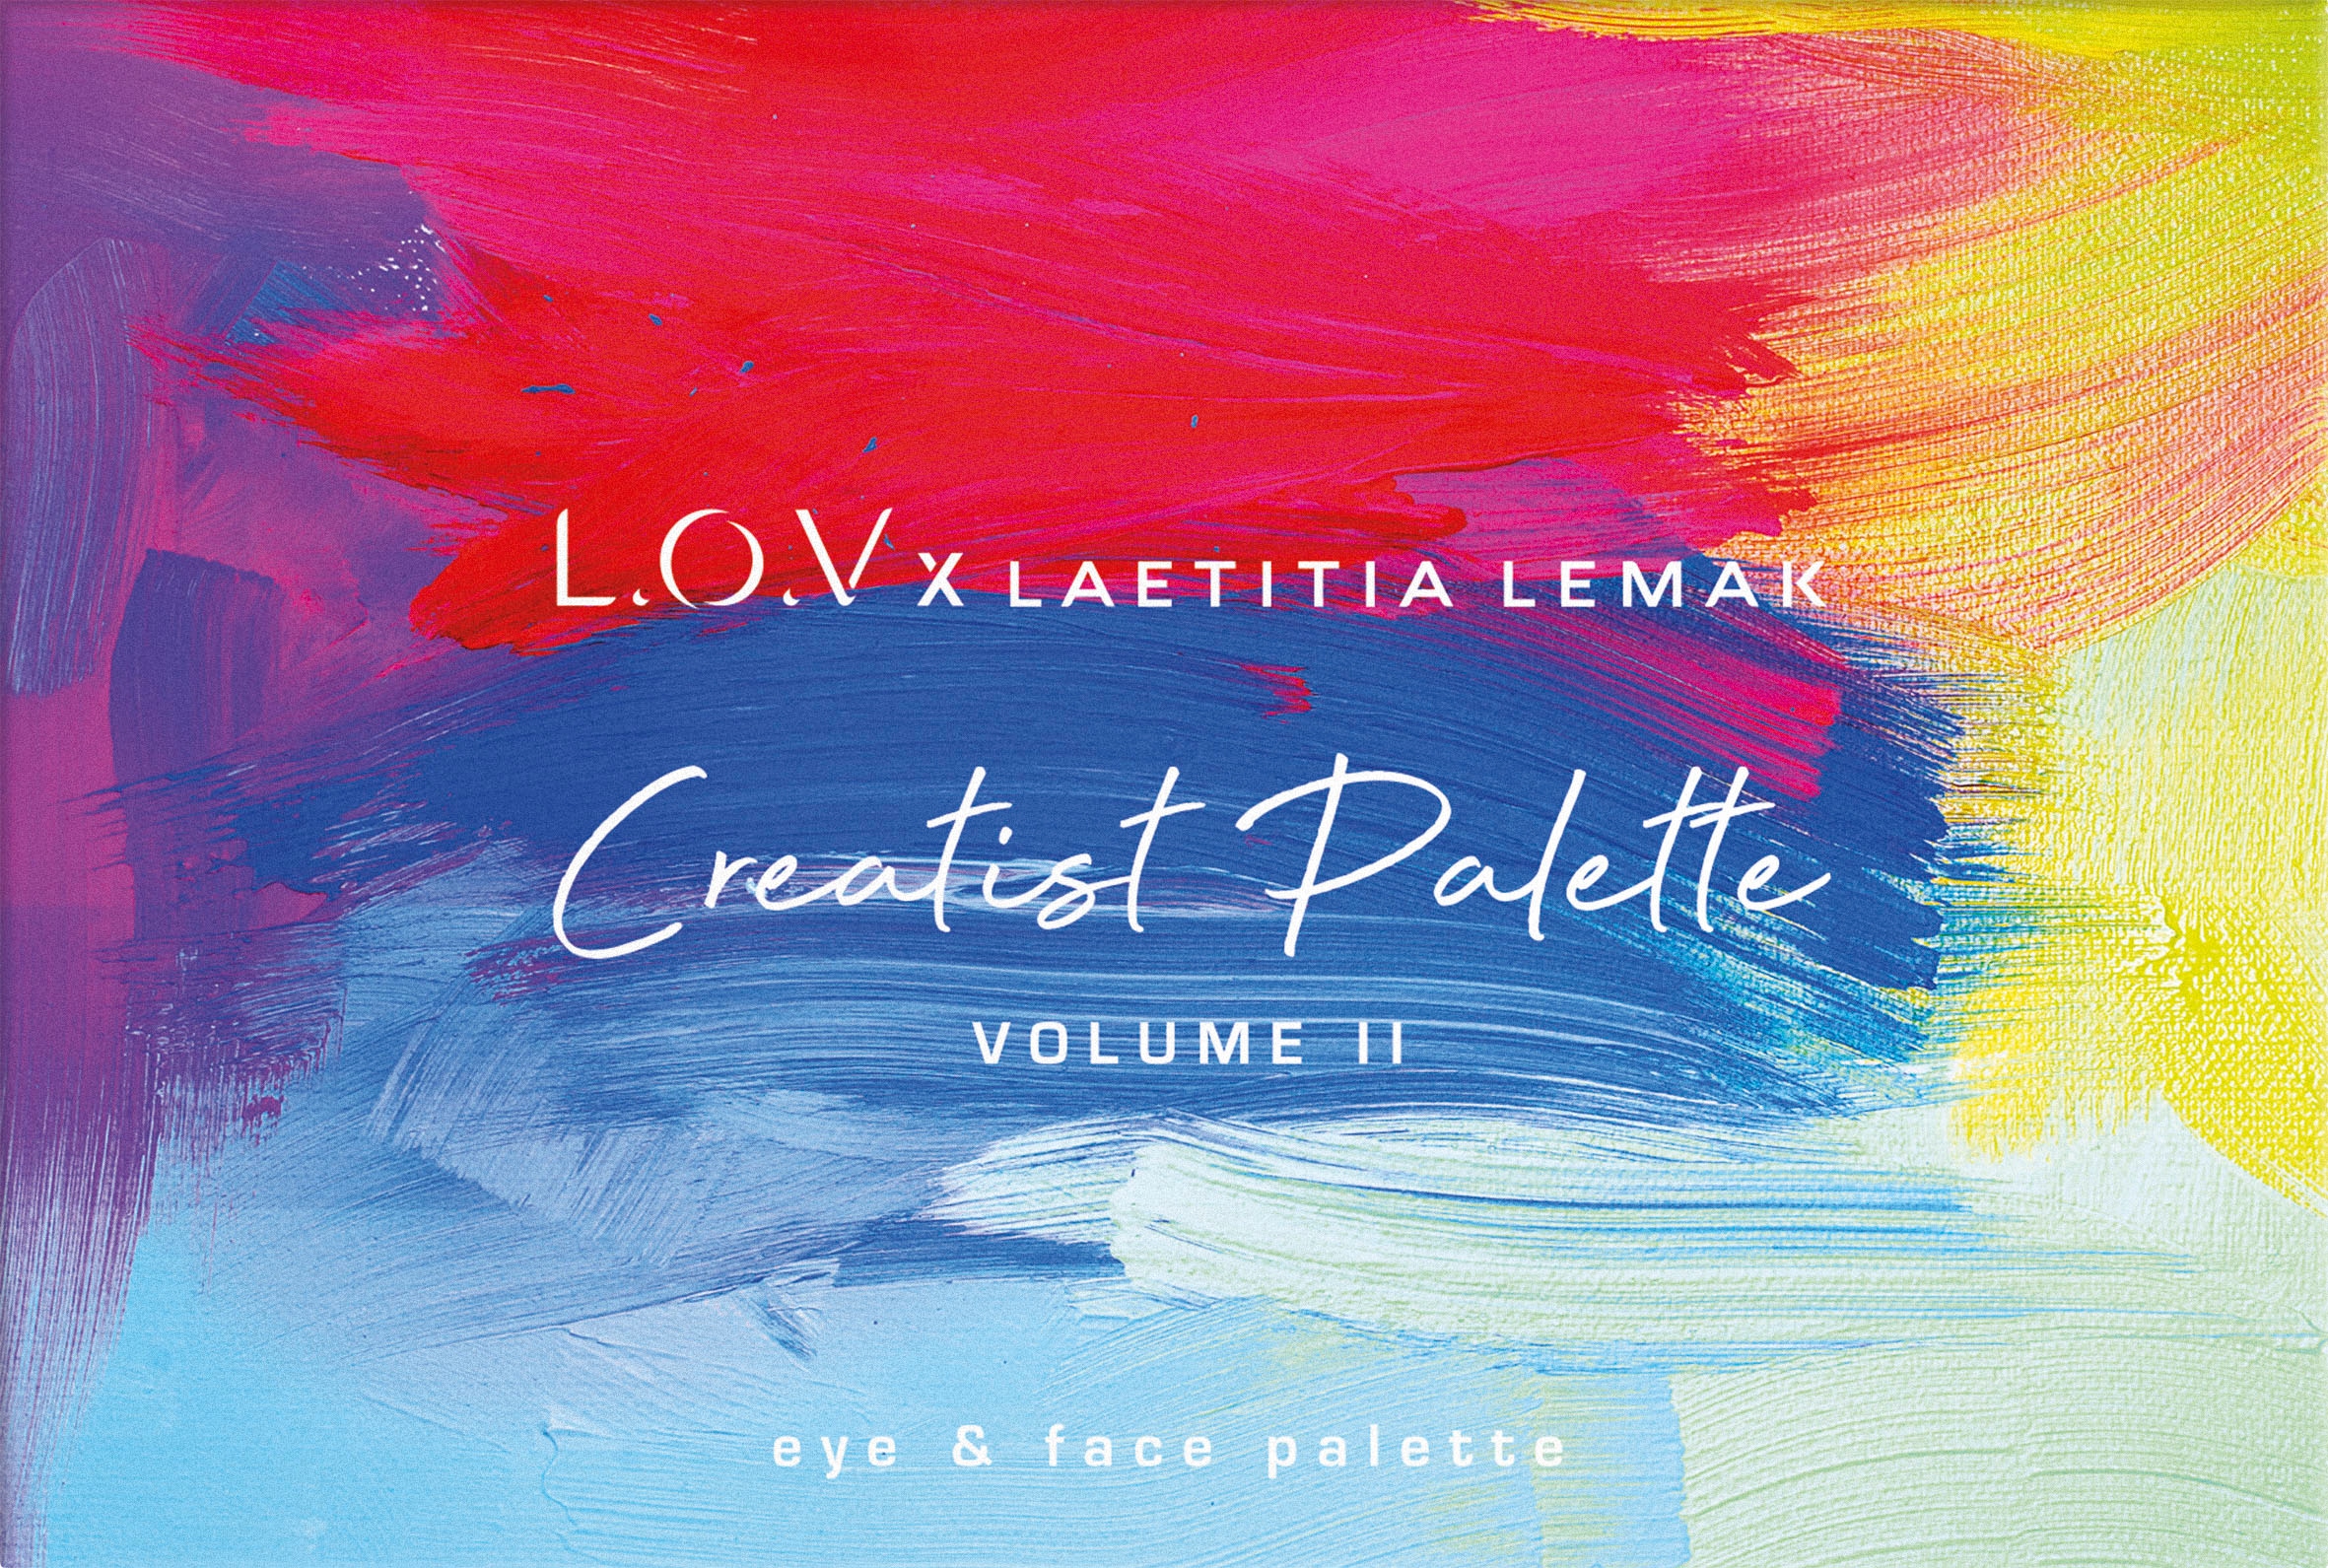 L.O.V Lidschatten-Palette »L.O.V x LAETITIA LEMAK CREATIST PALETTE Volume  II eye & face palette« online kaufen